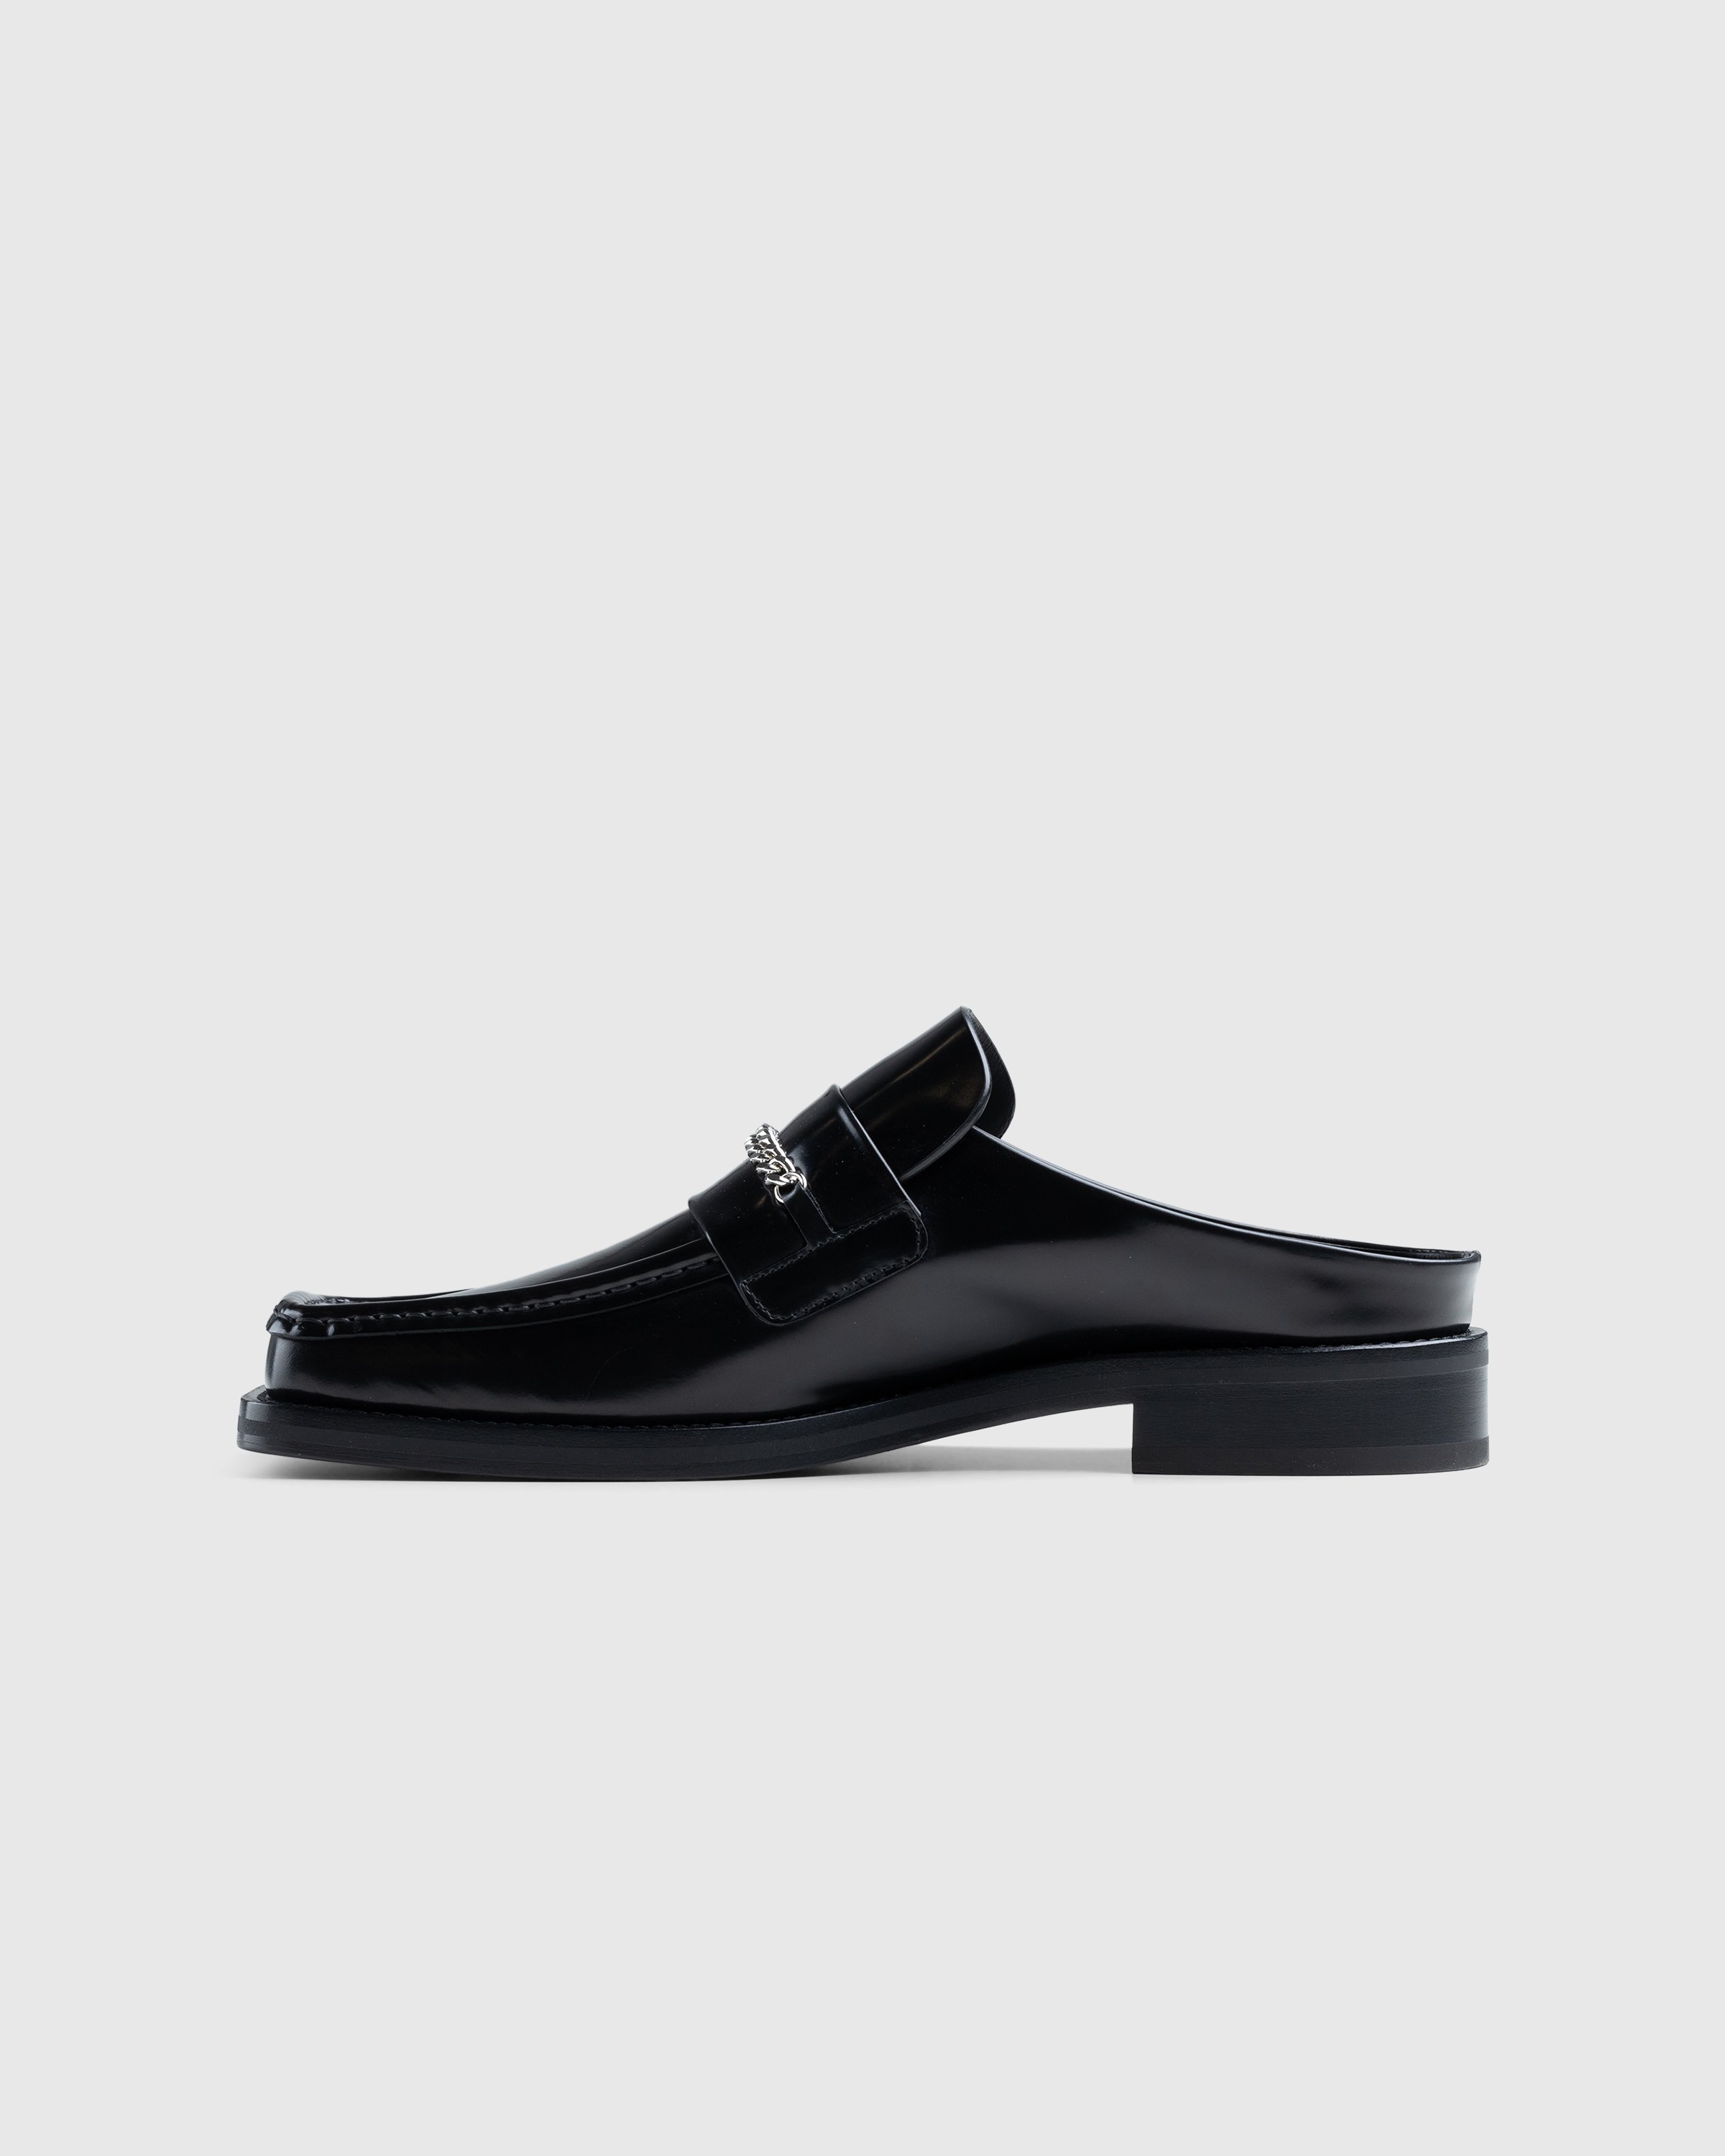 Martine Rose - Square Toe Mule High Shine Black - Footwear - Black - Image 2